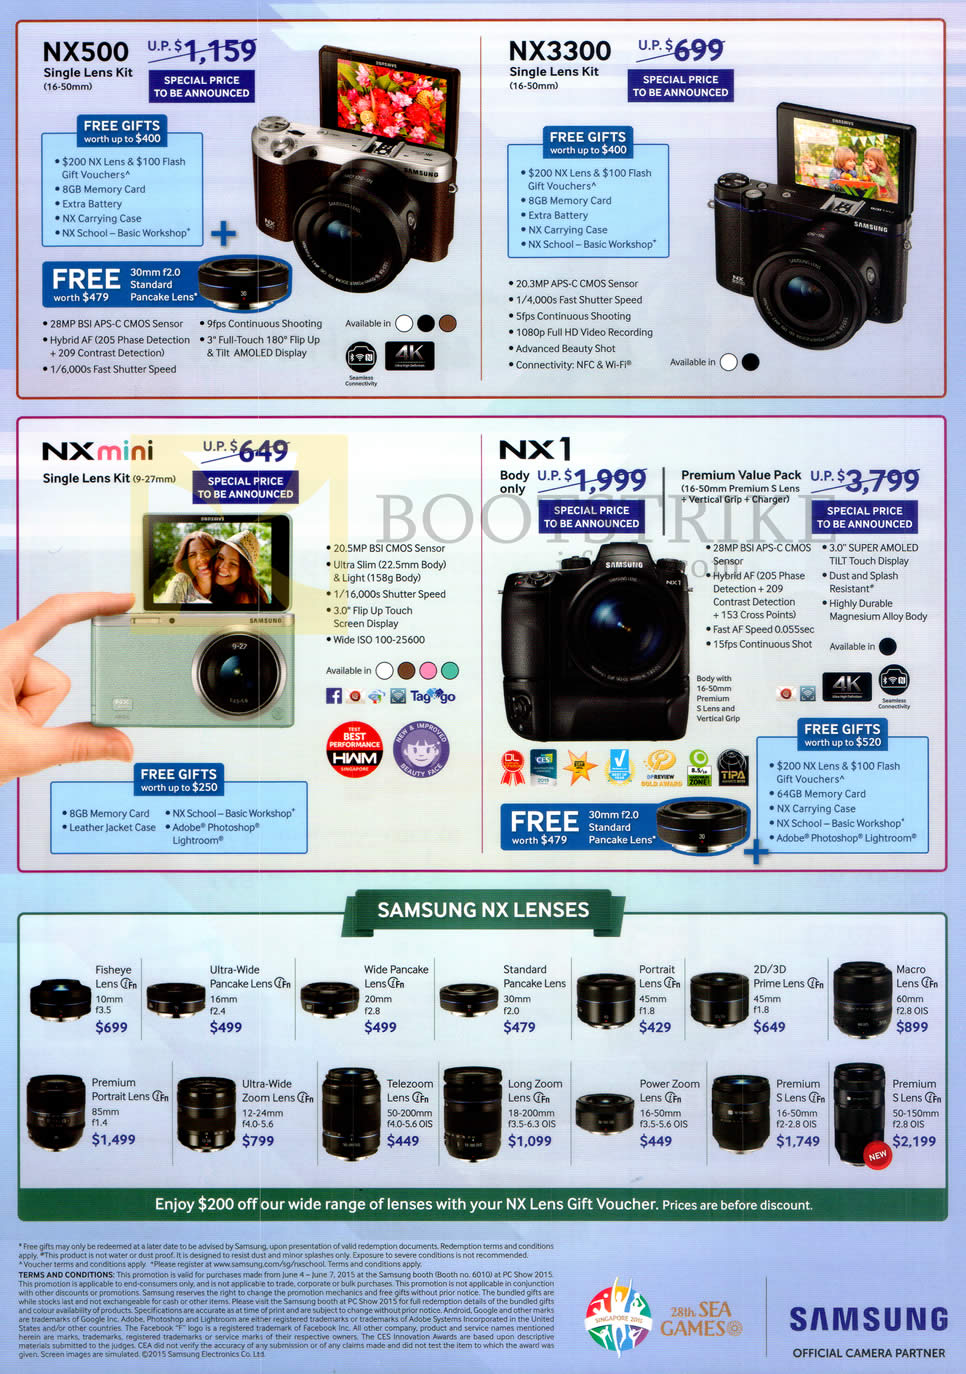 PC SHOW 2015 price list image brochure of Samsung (No Prices) Digital Cameras, Lenses, NX500, NX3300, NX Mini, NX1, Lenses